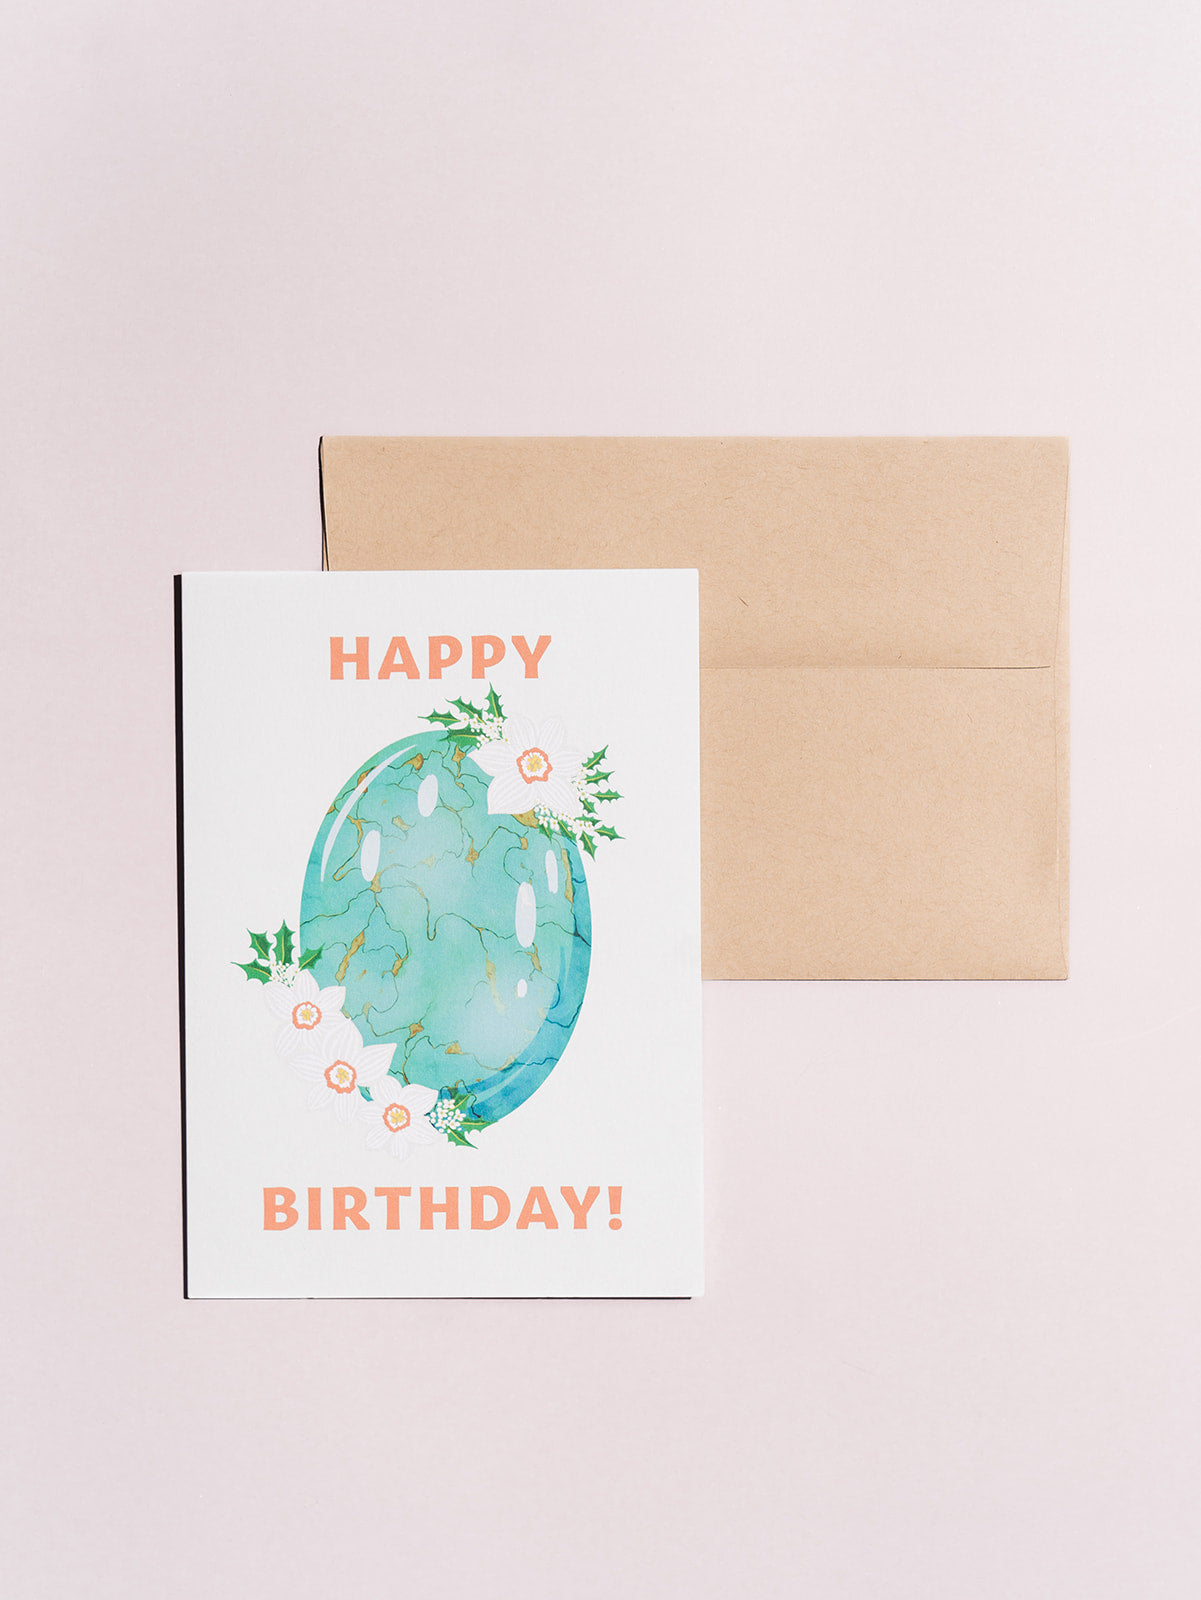 december turquoise narcissus birthstone gem stone birthday card with kraft envelope